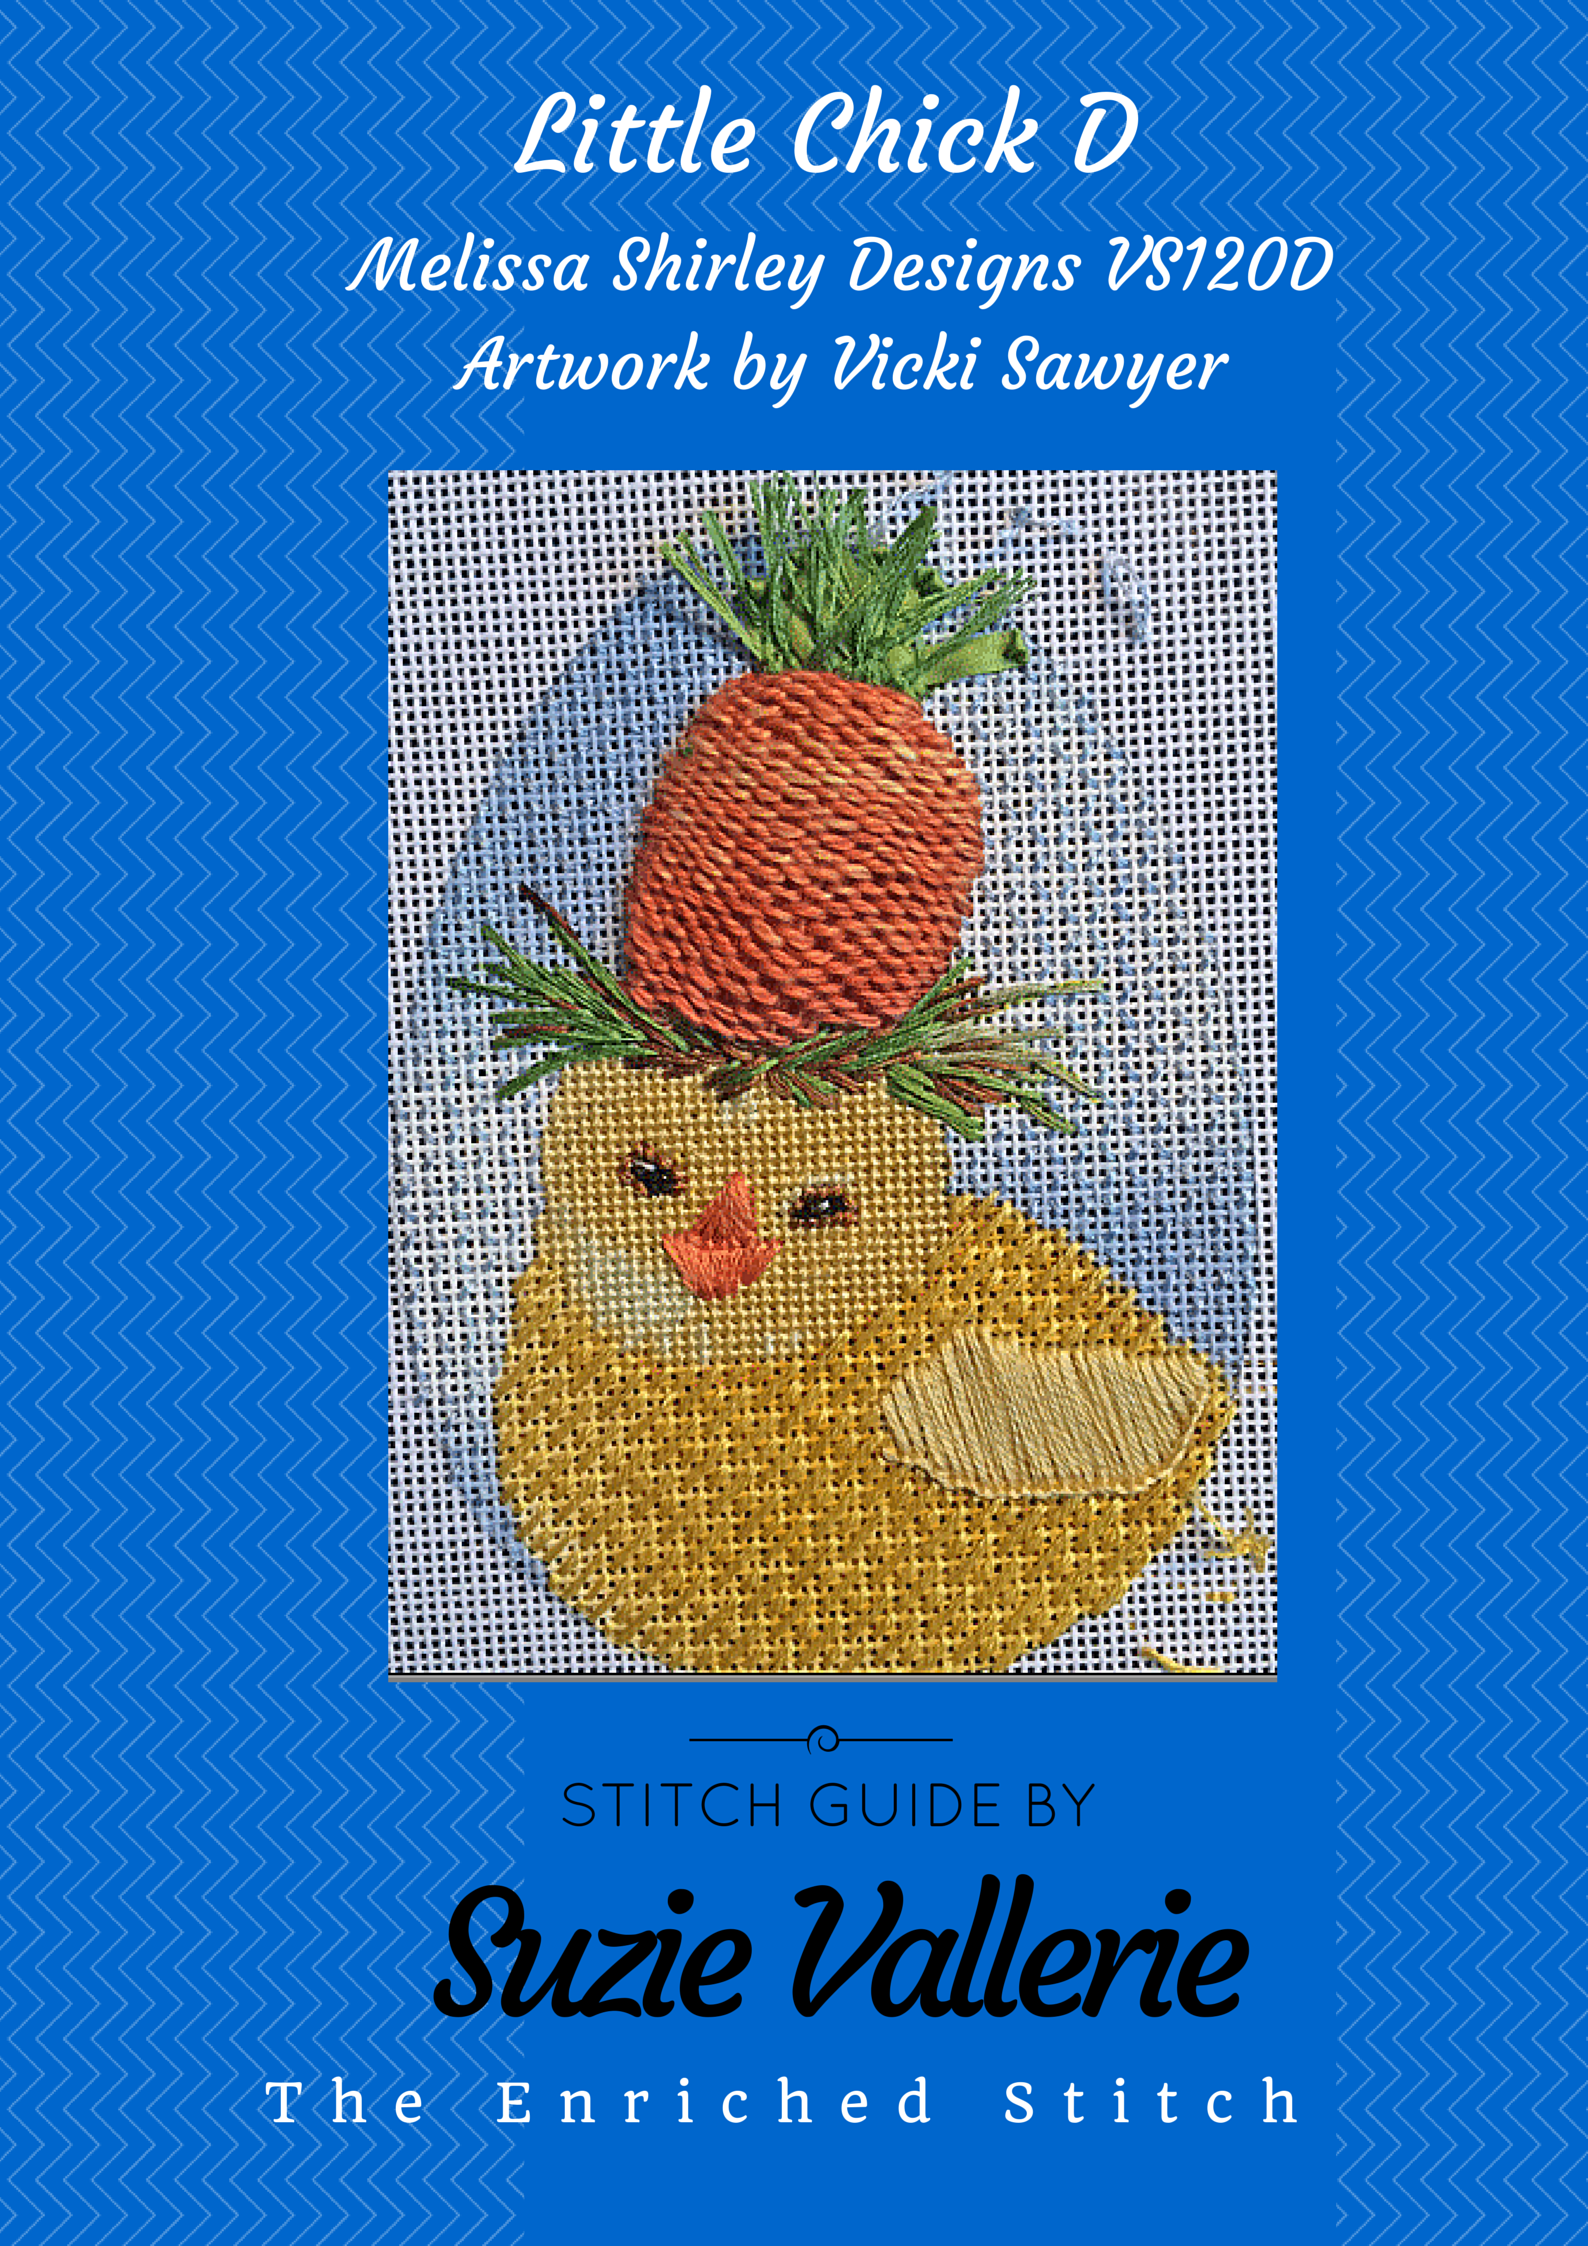 KL-015 Happy Snowman Kit – The Enriched Stitch